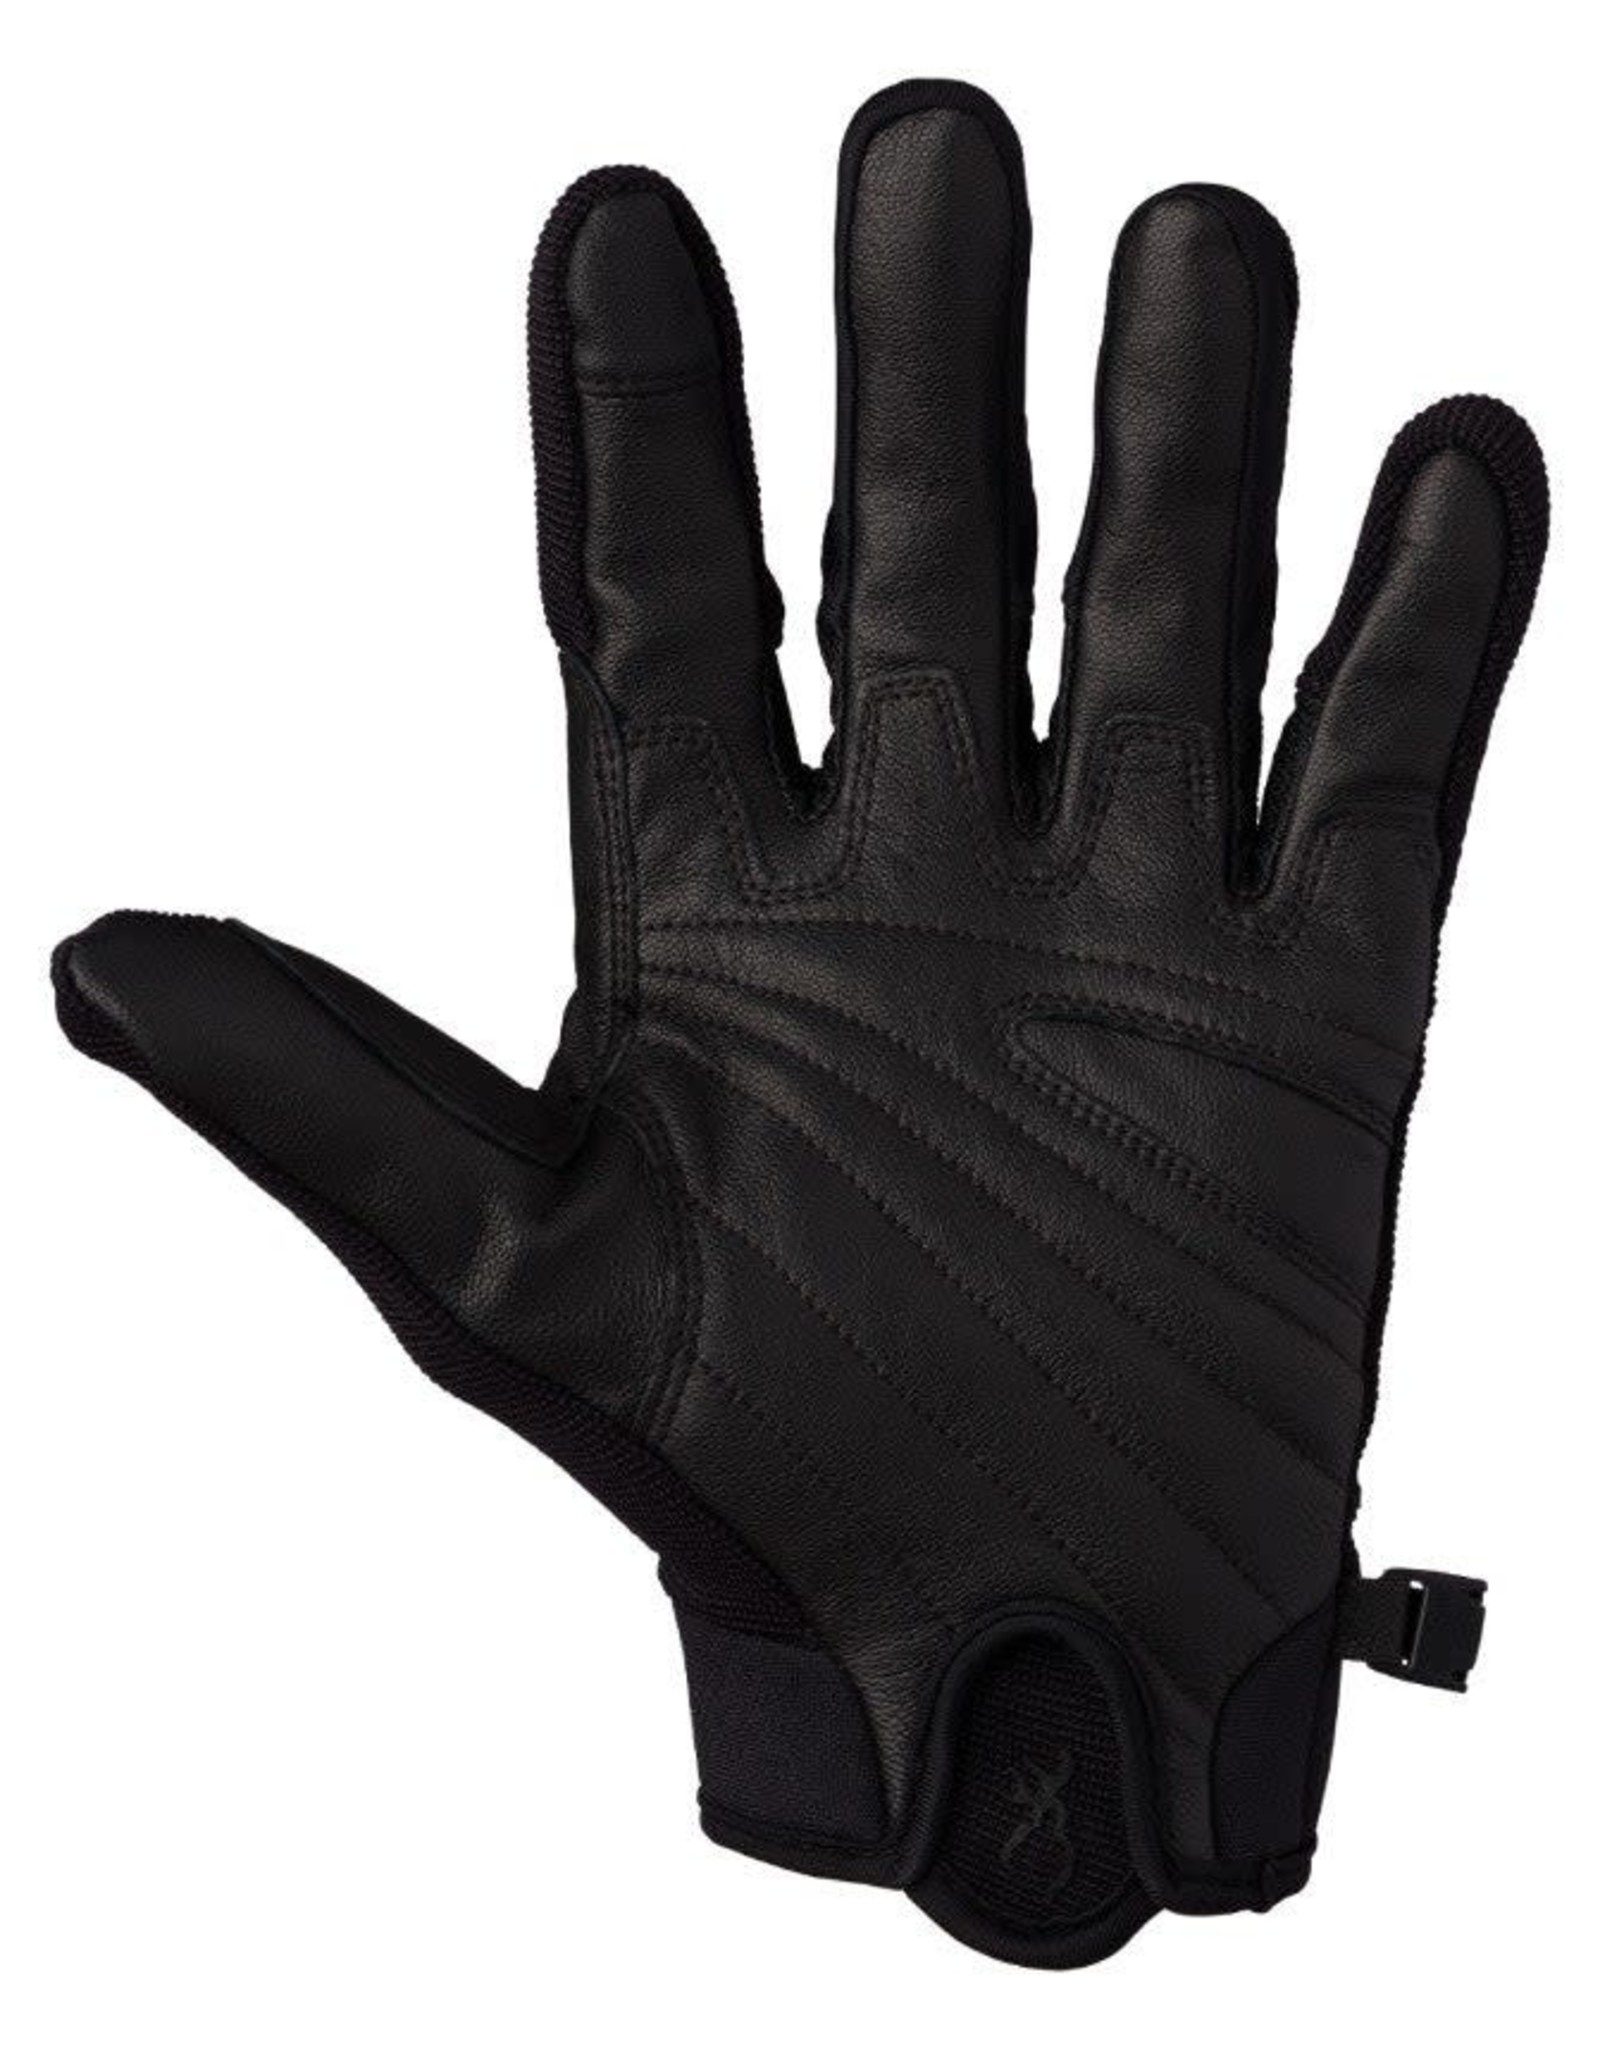 Browning Ace Shooting Glove - Black/Black - LG